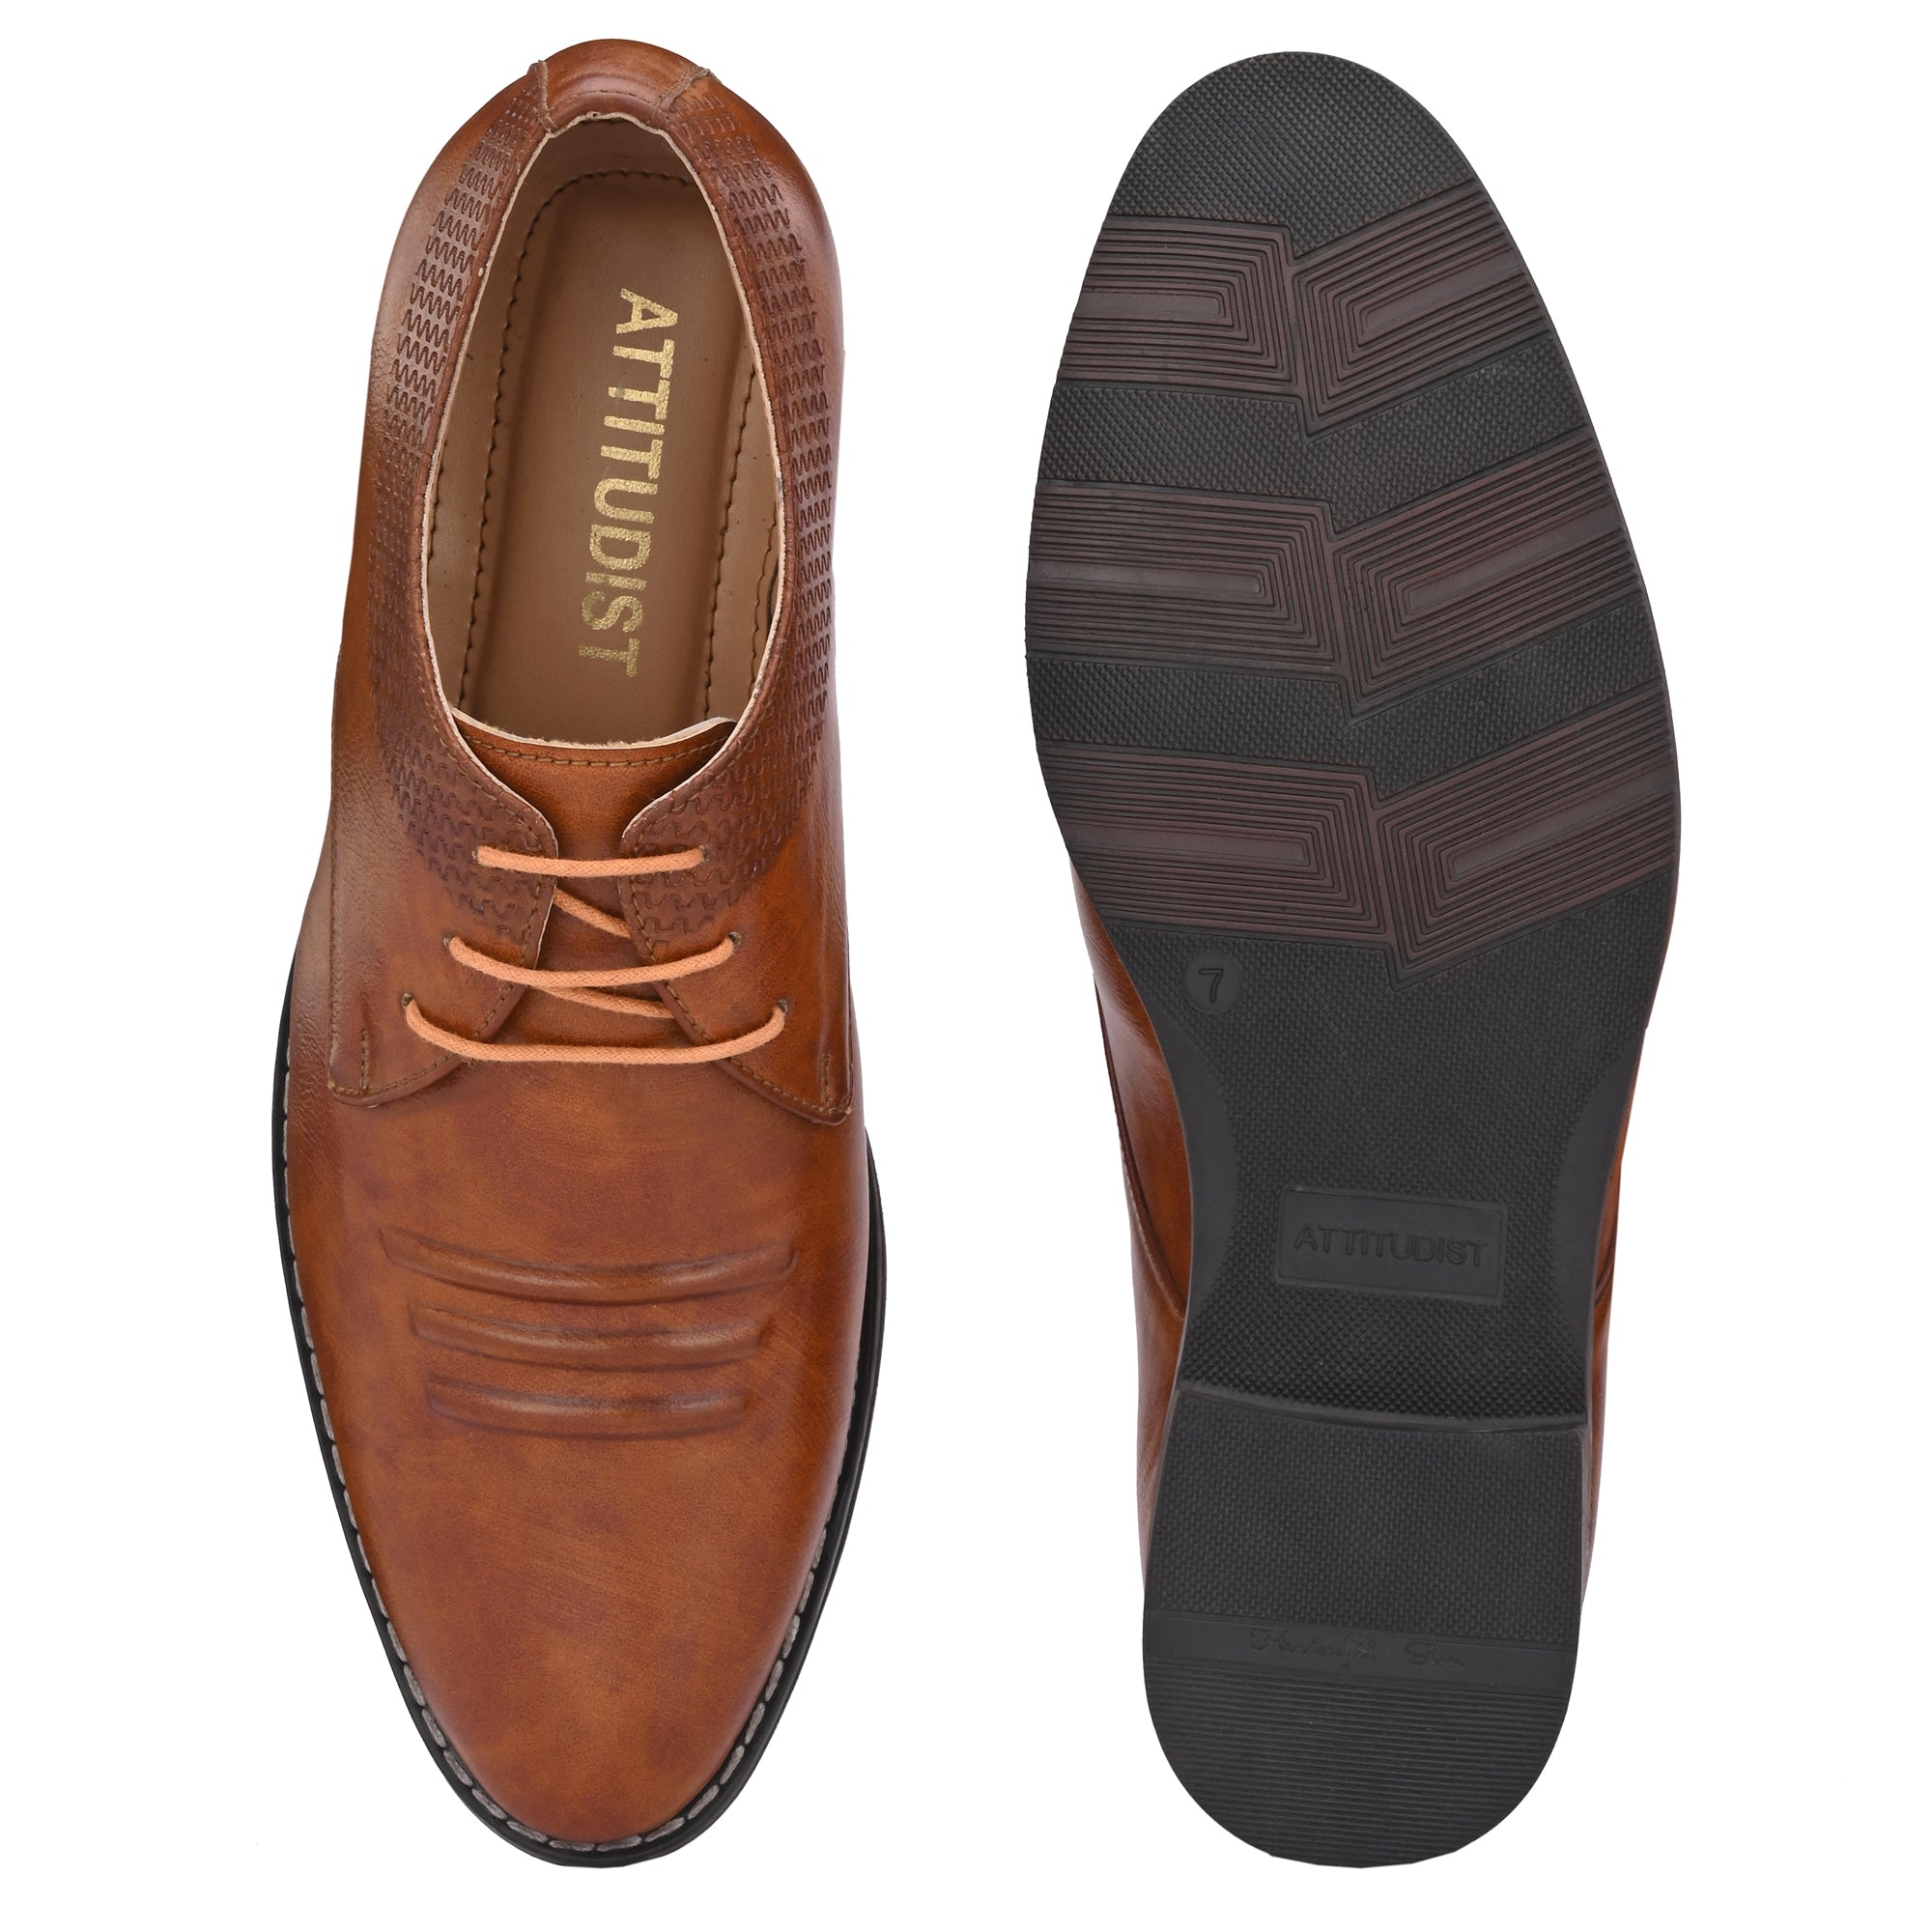 formal-lace-up-attitudist-shoes-for-men-with-design-3703tan